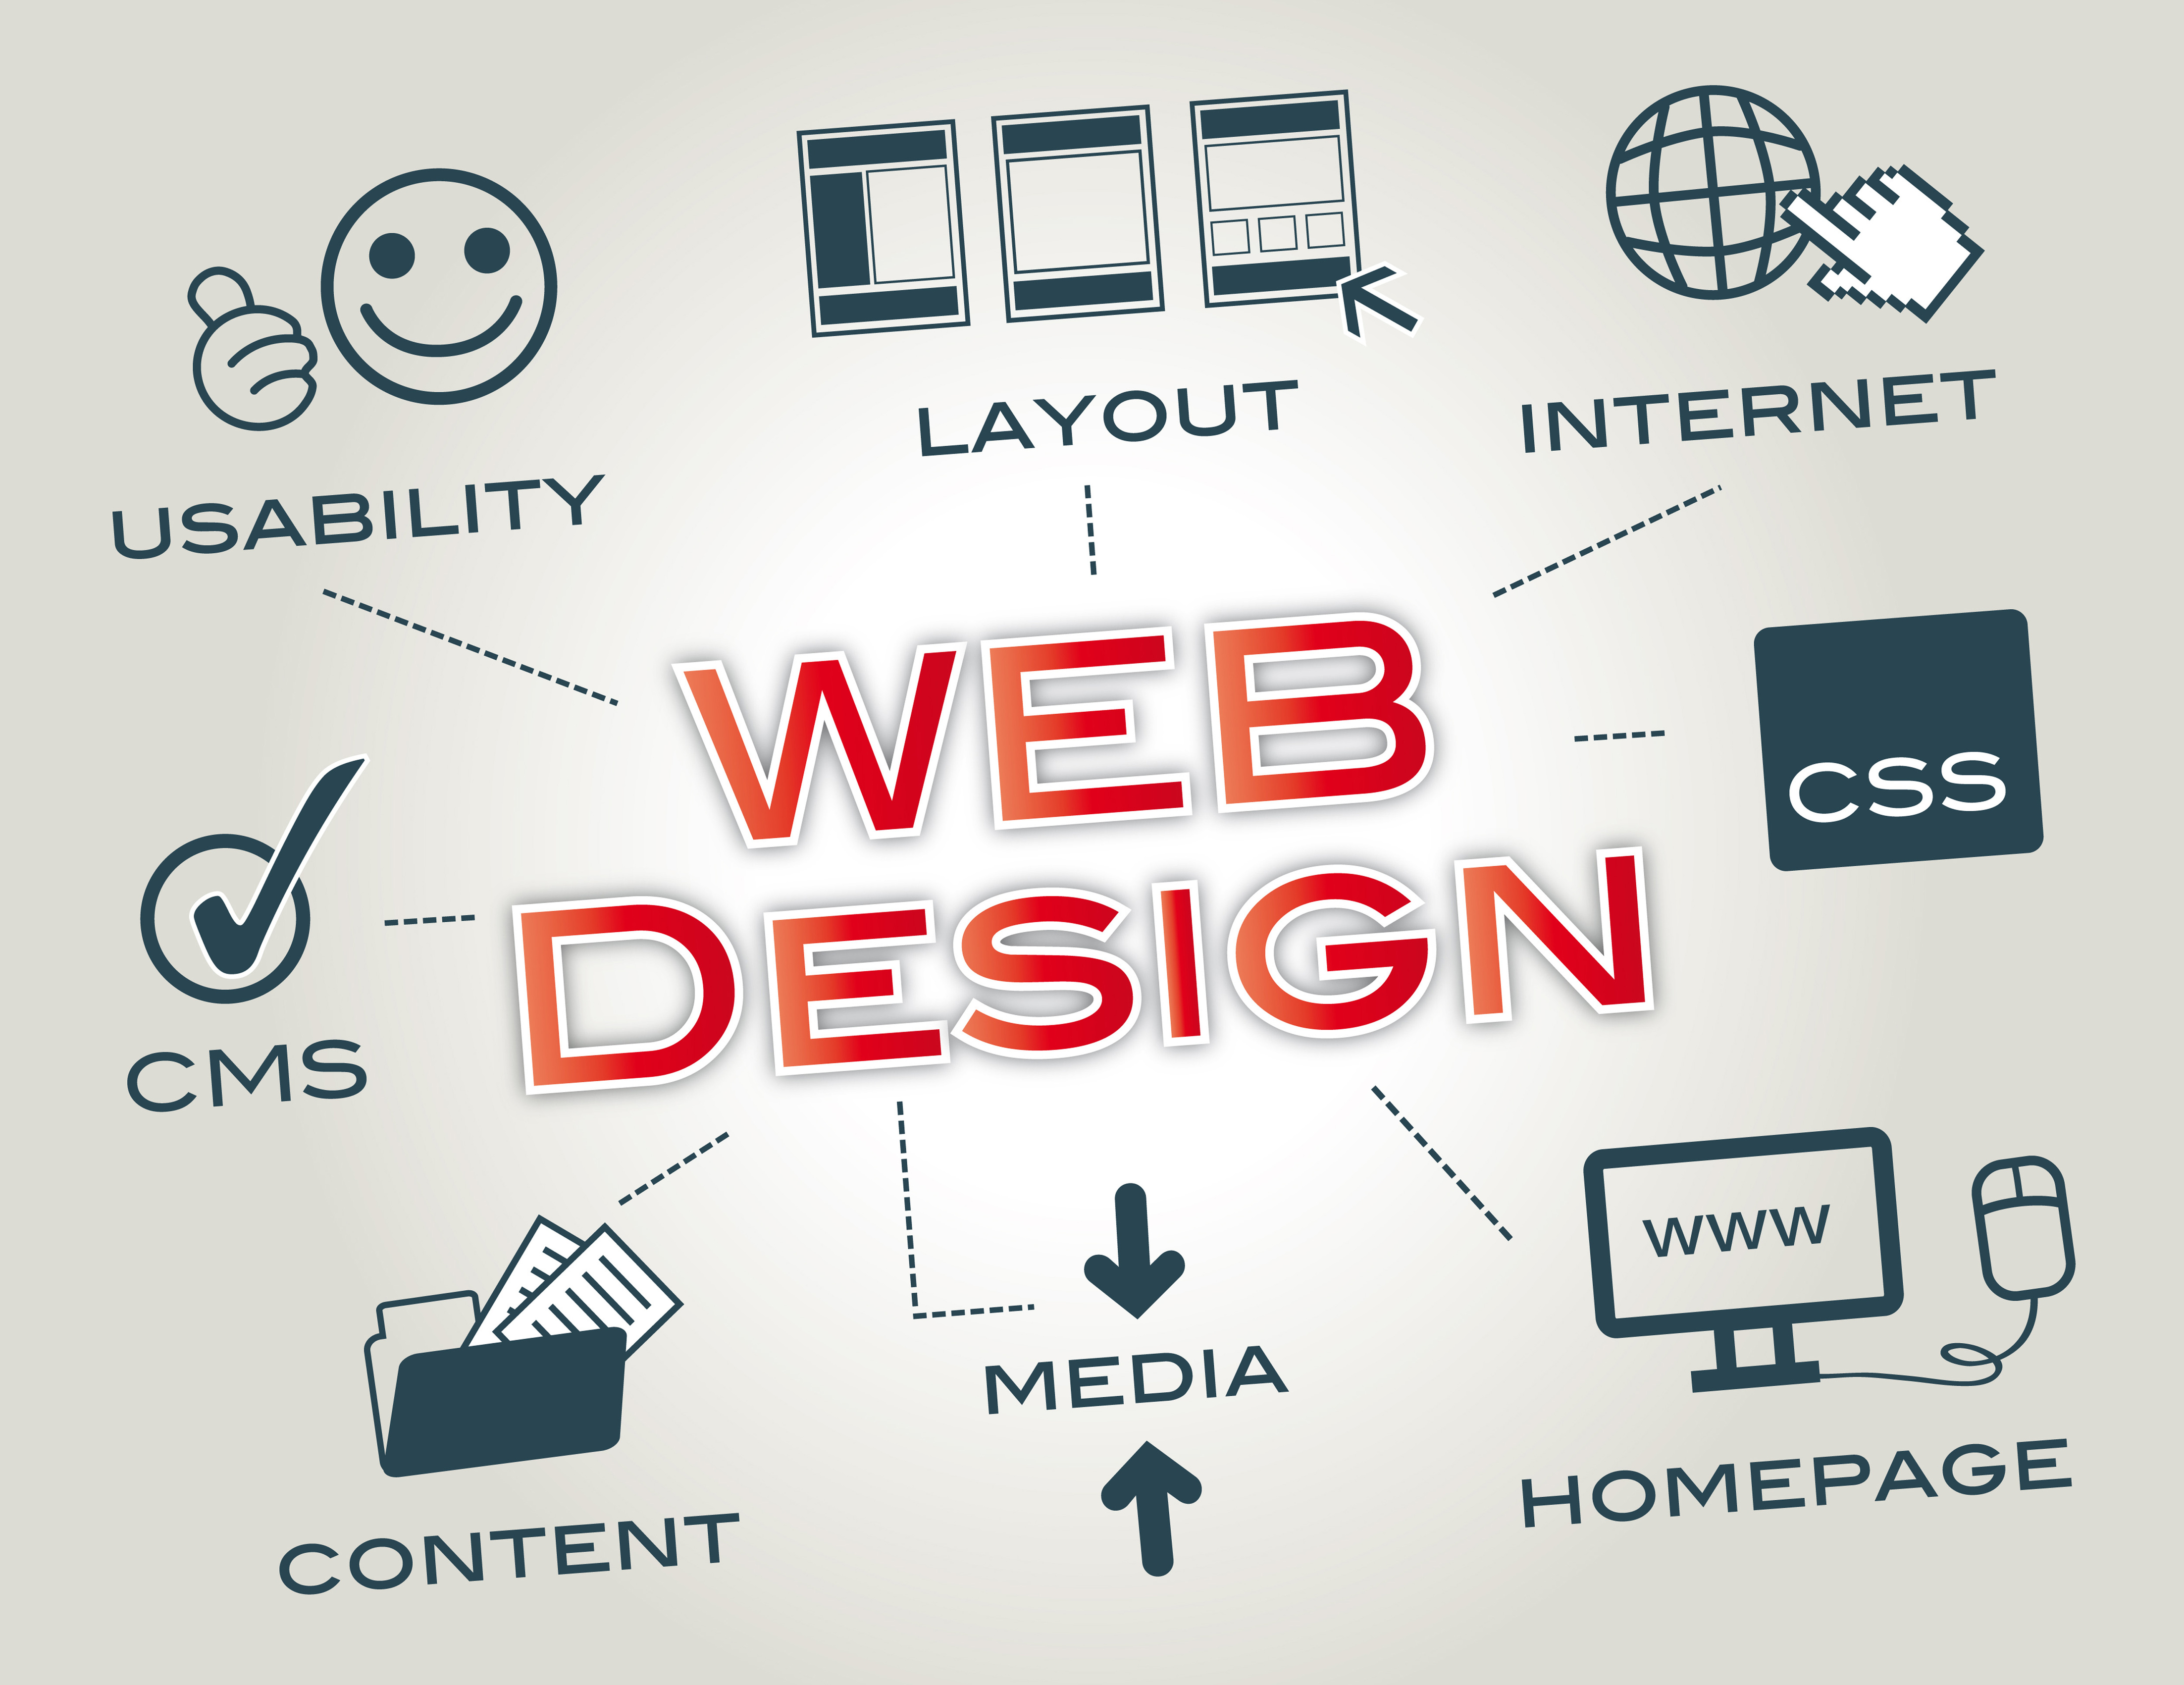 web design malaysia